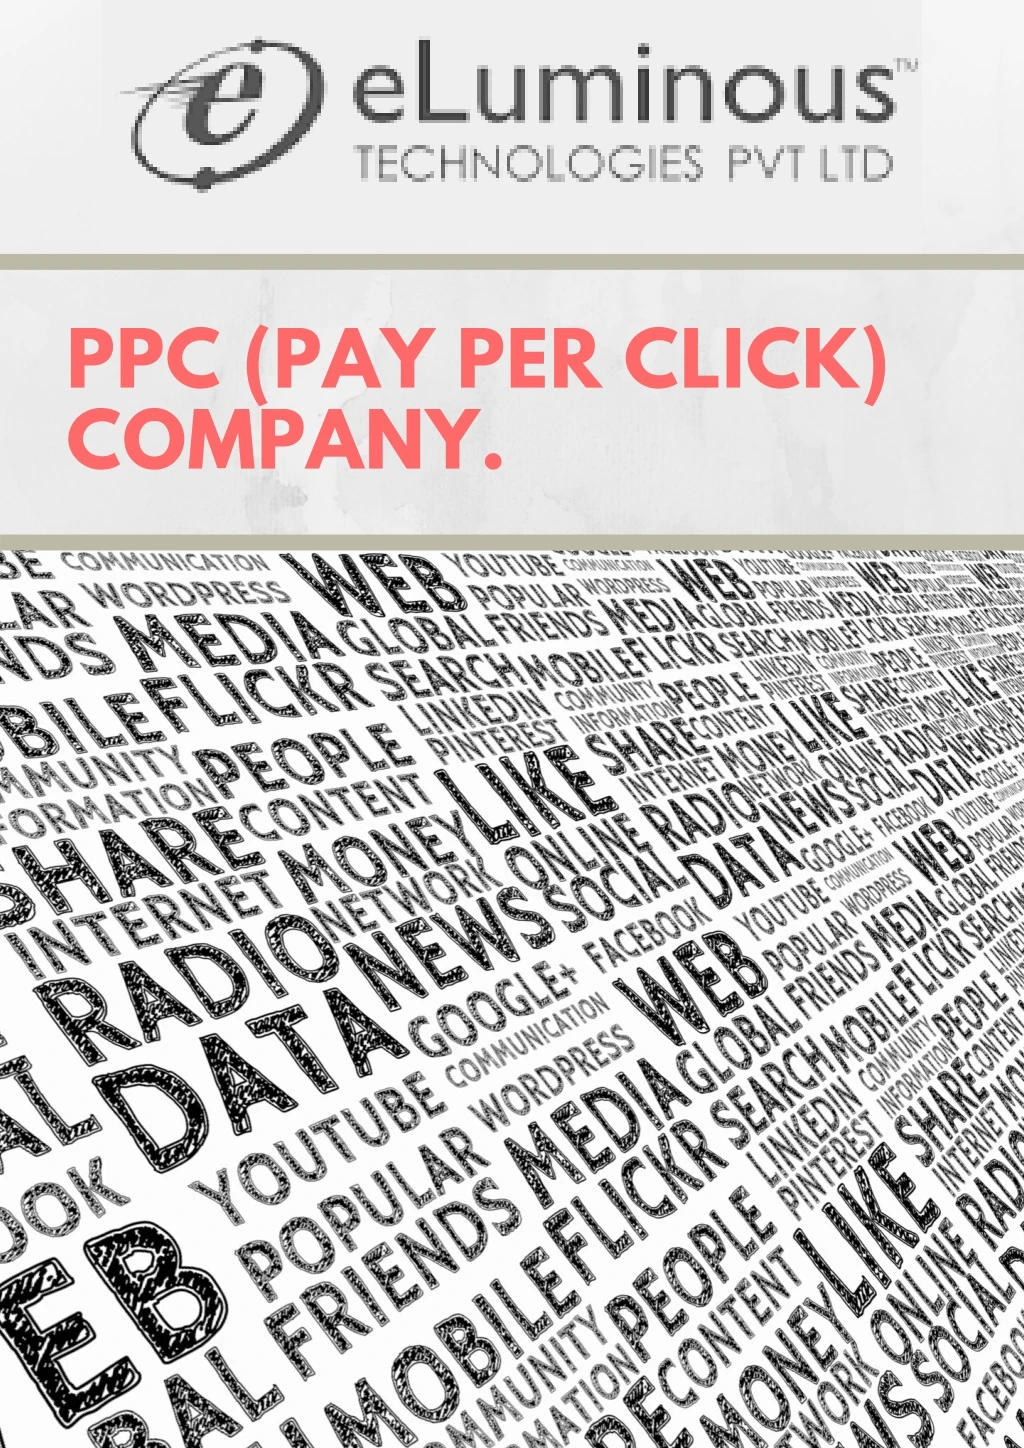 ppc pay per click company